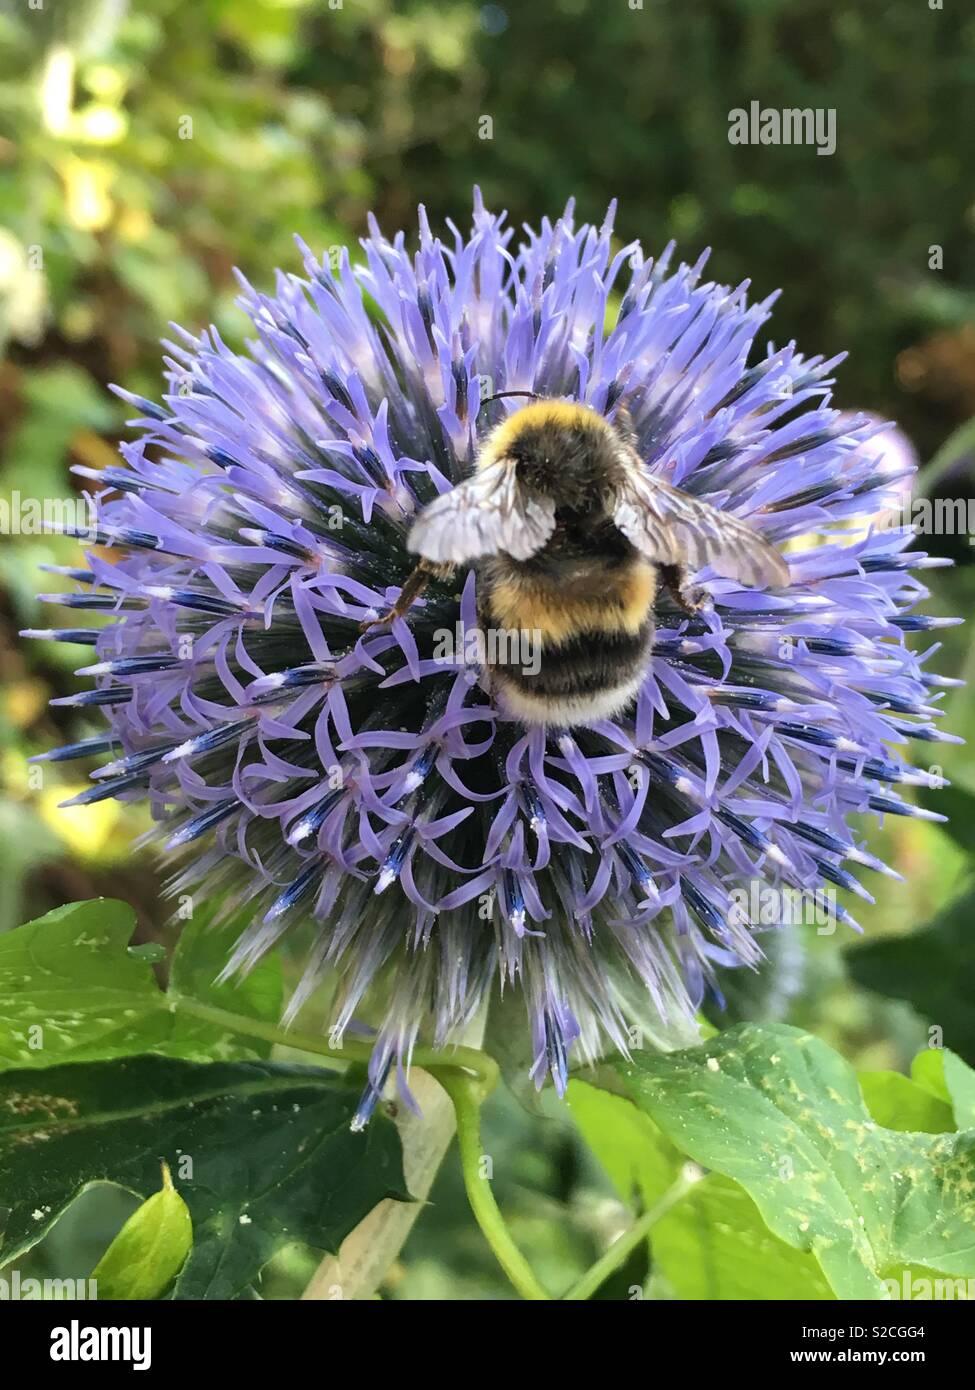 Bumblebee on alium flower Stock Photo